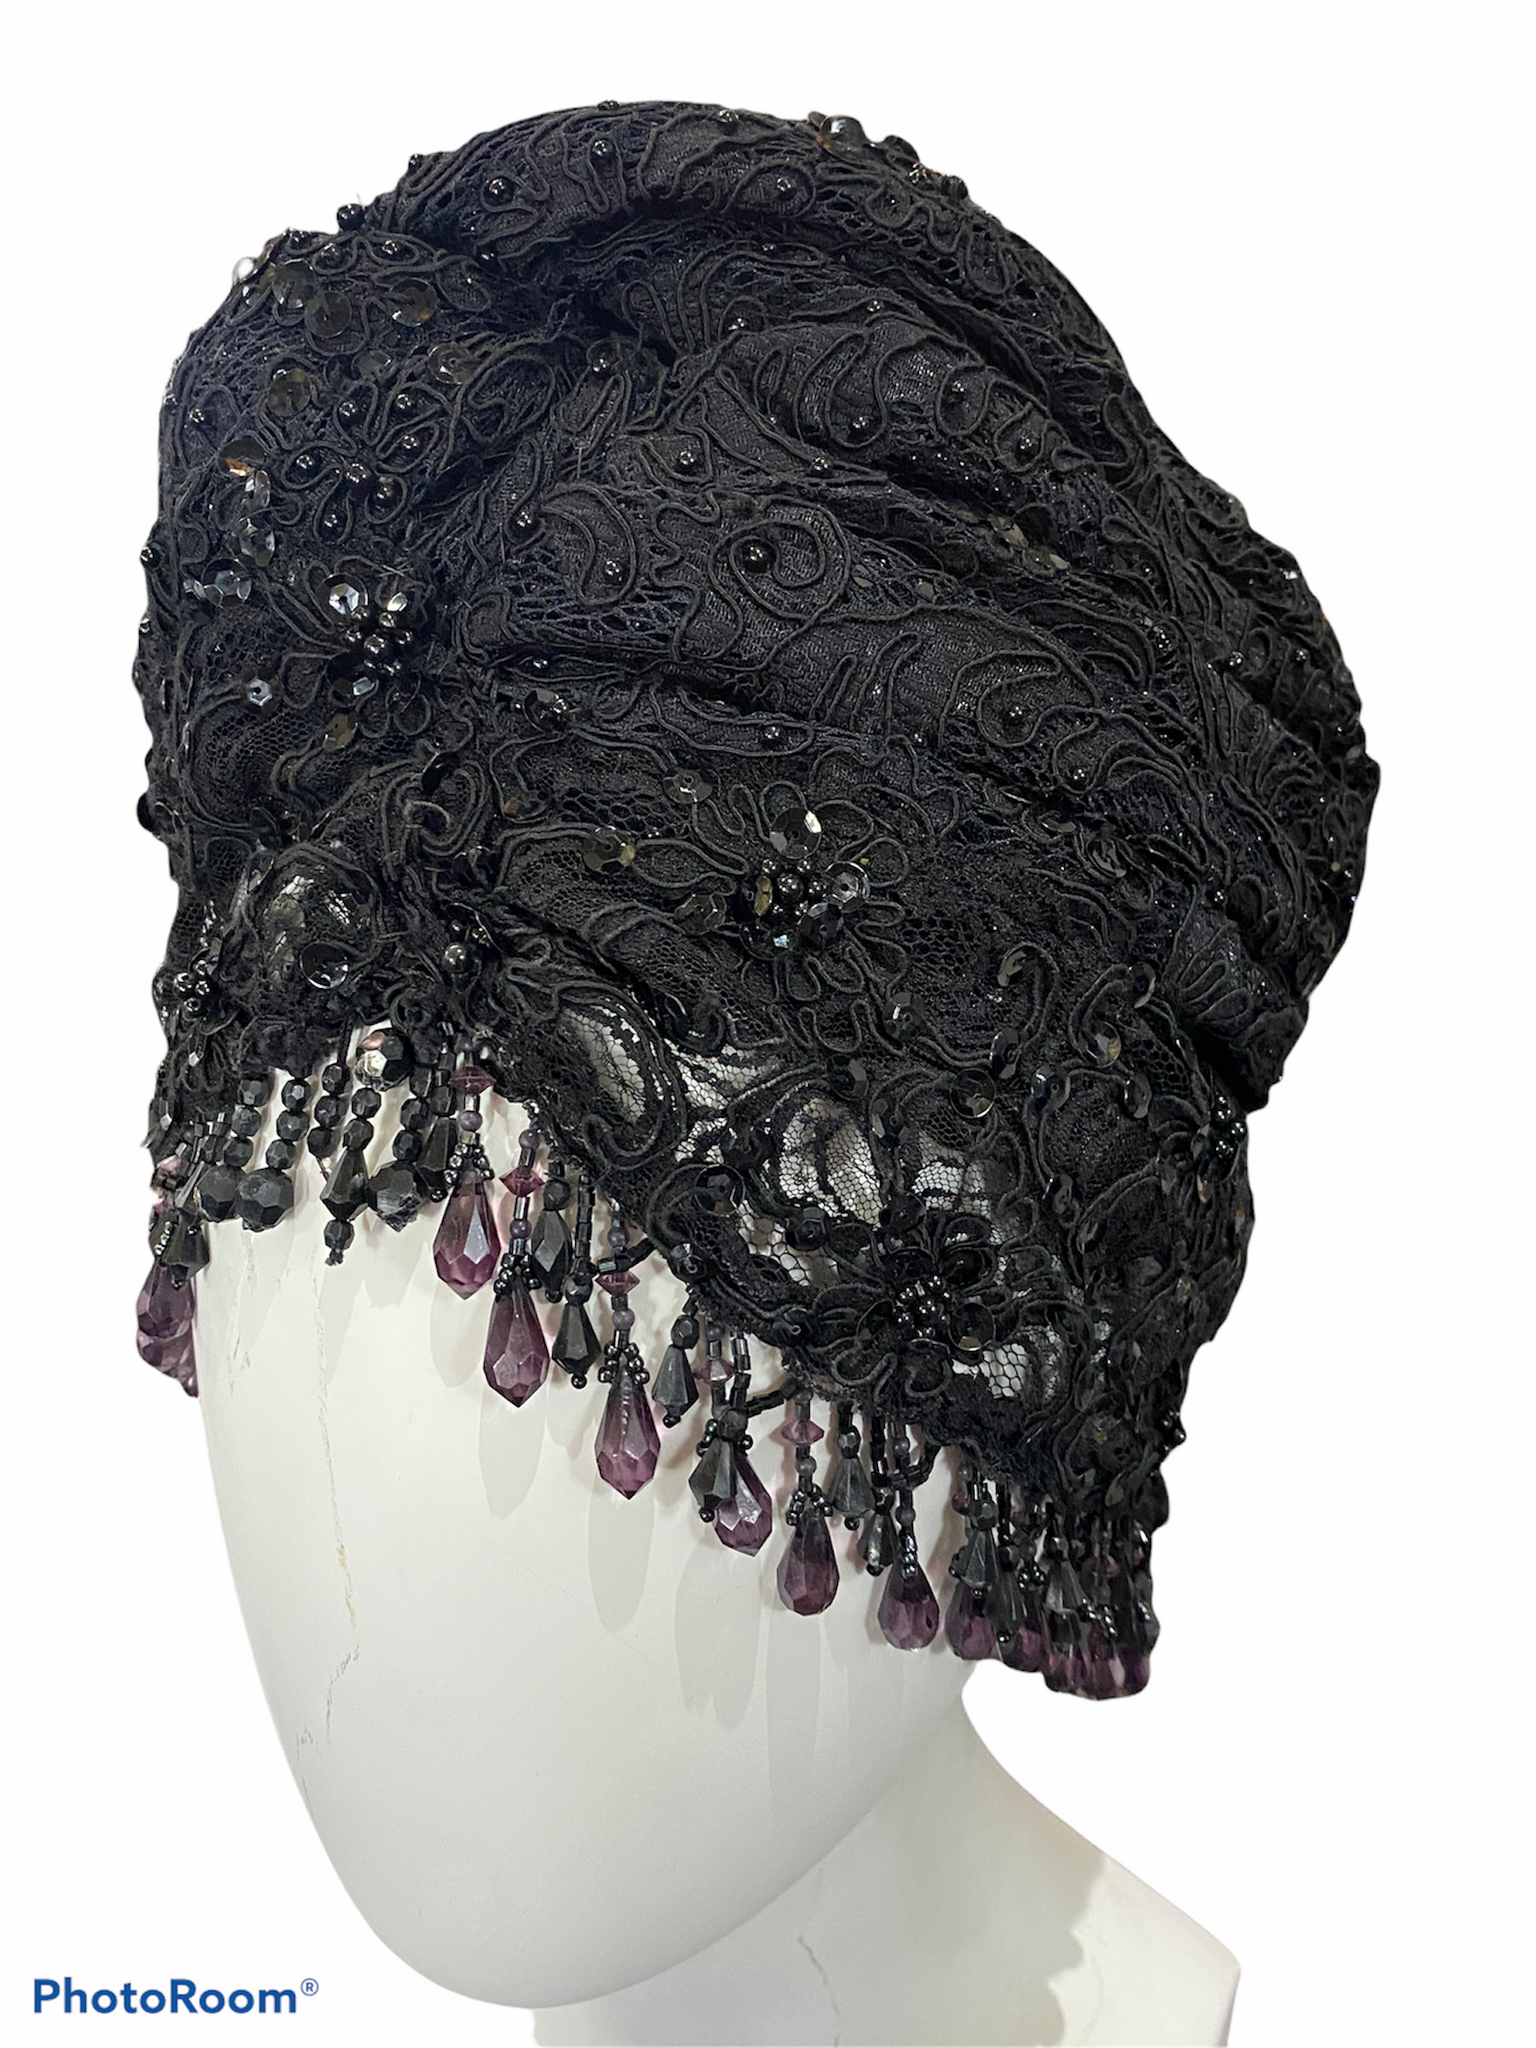 Kokin 80s Black Lace Turban with Beaded Fringe  SIDE 2 of 4